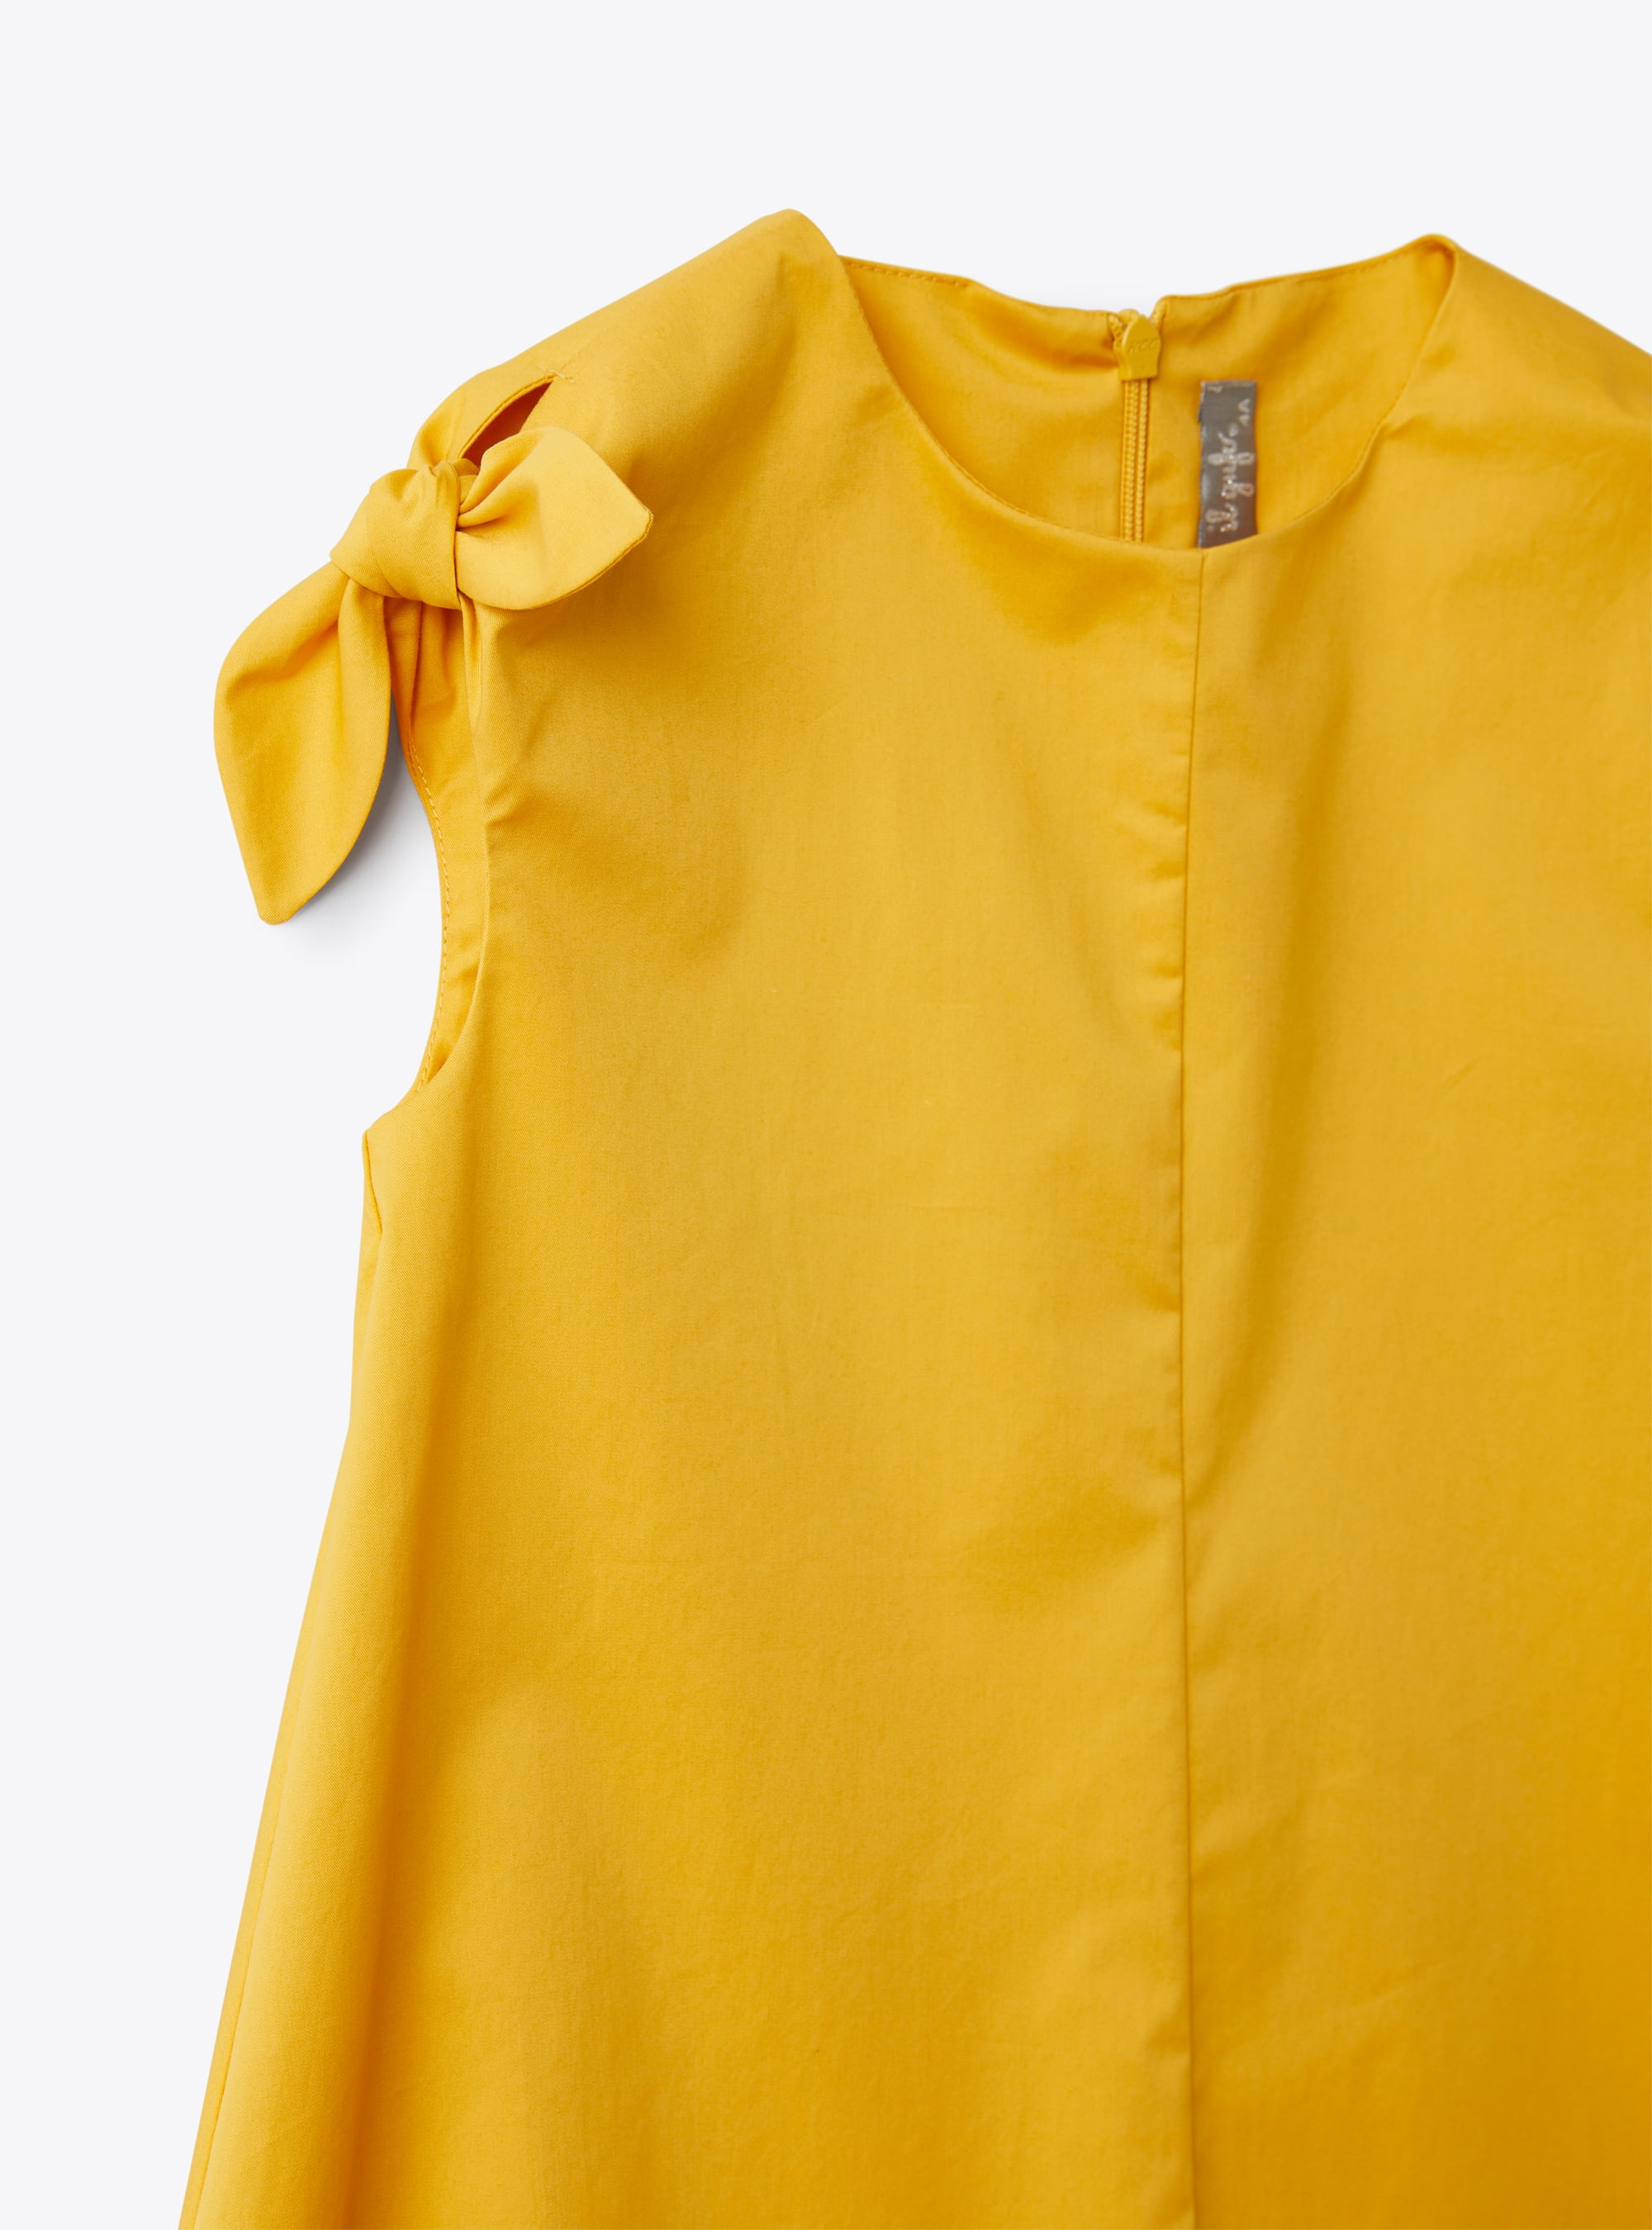 Платье оттенка «желтая куркума» из эластичного поплина с бантиками - Желтый | Il Gufo